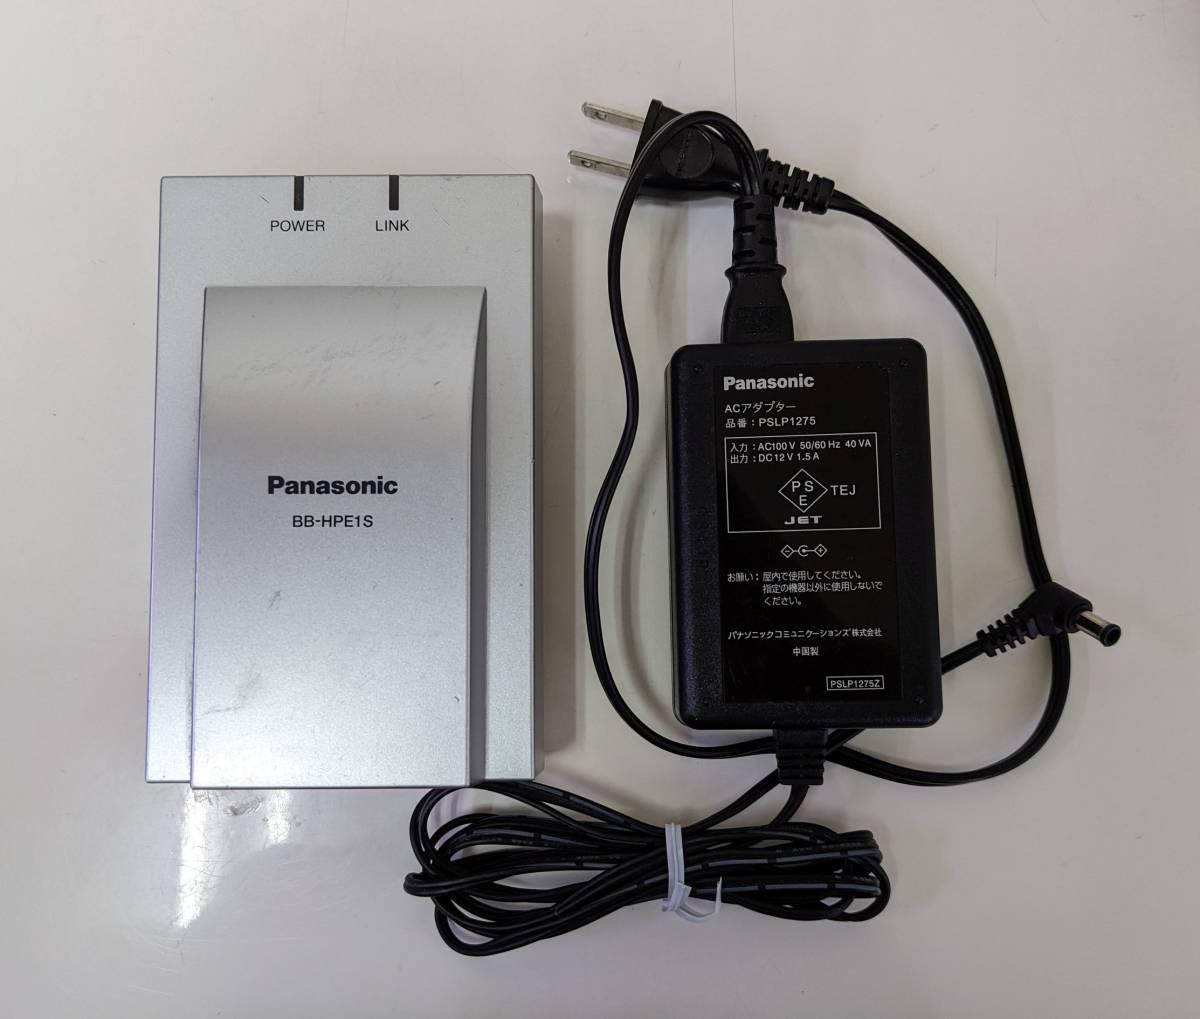  Panasonic i-sa net supply of electricity adaptor (BB-HPE1S)* Panasonic original AC adapter (PSLP1275) secondhand goods each 1 piece 